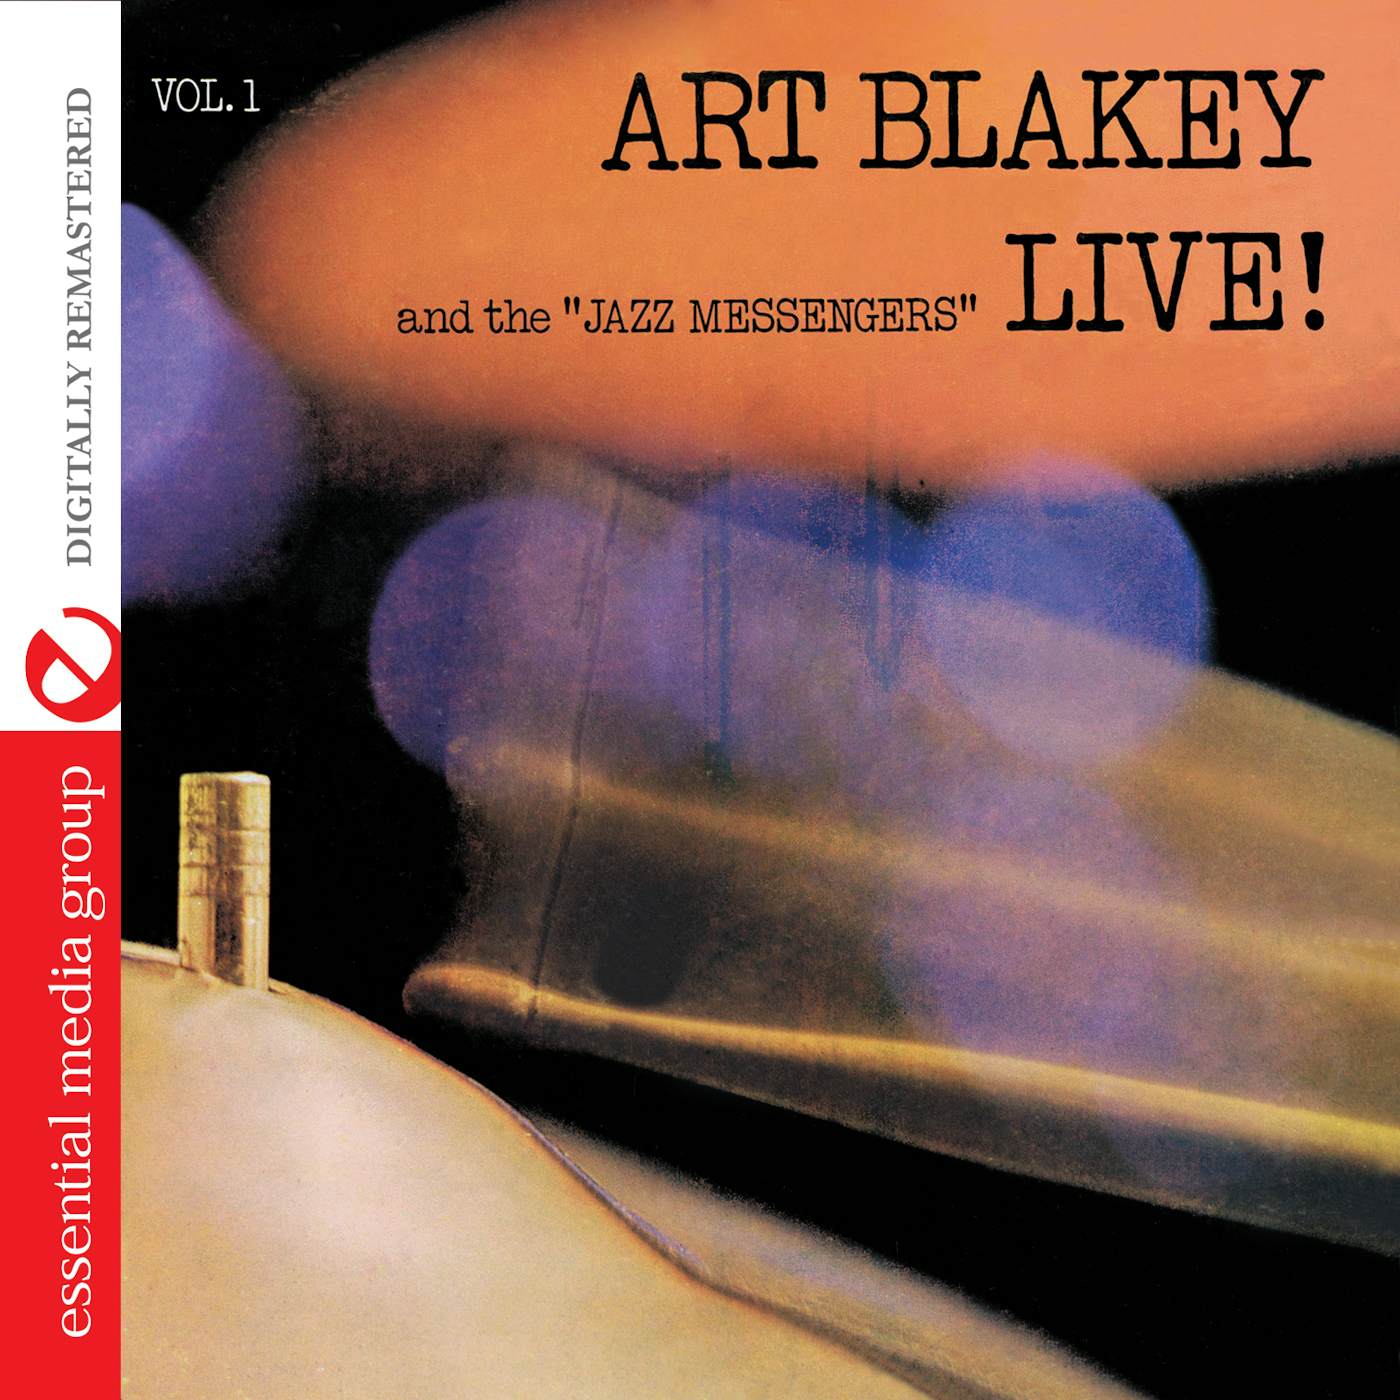 Art Blakey & The Jazz Messengers LIVE VOL 1 CD